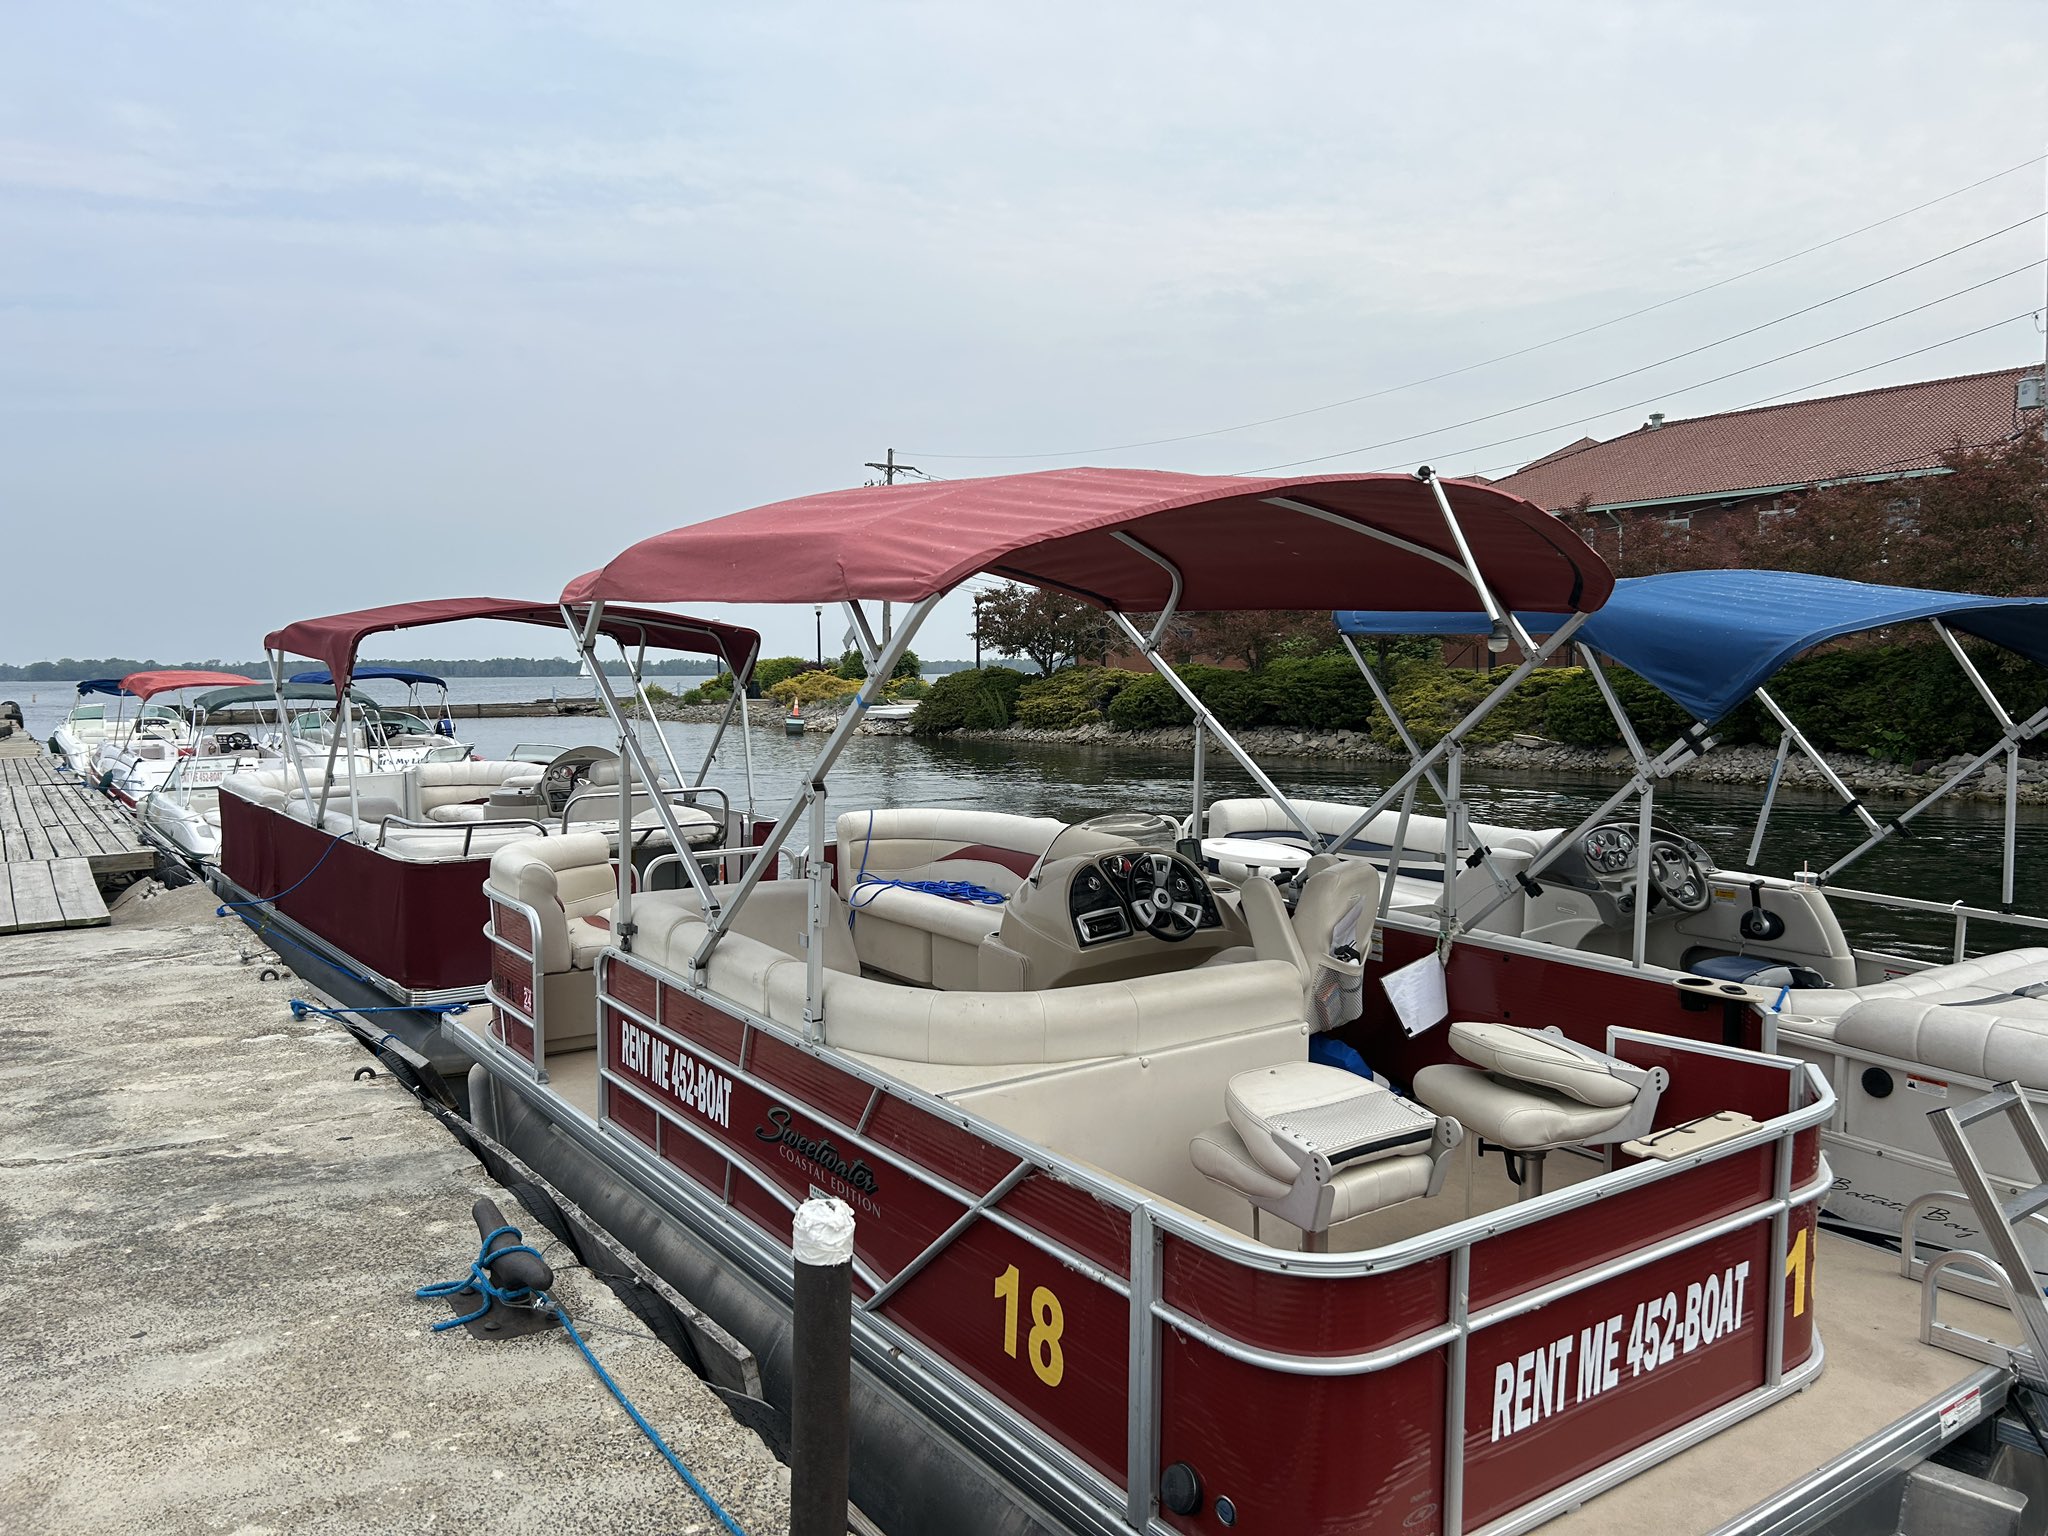 Boat Rentals See Slow Start to Summer Season